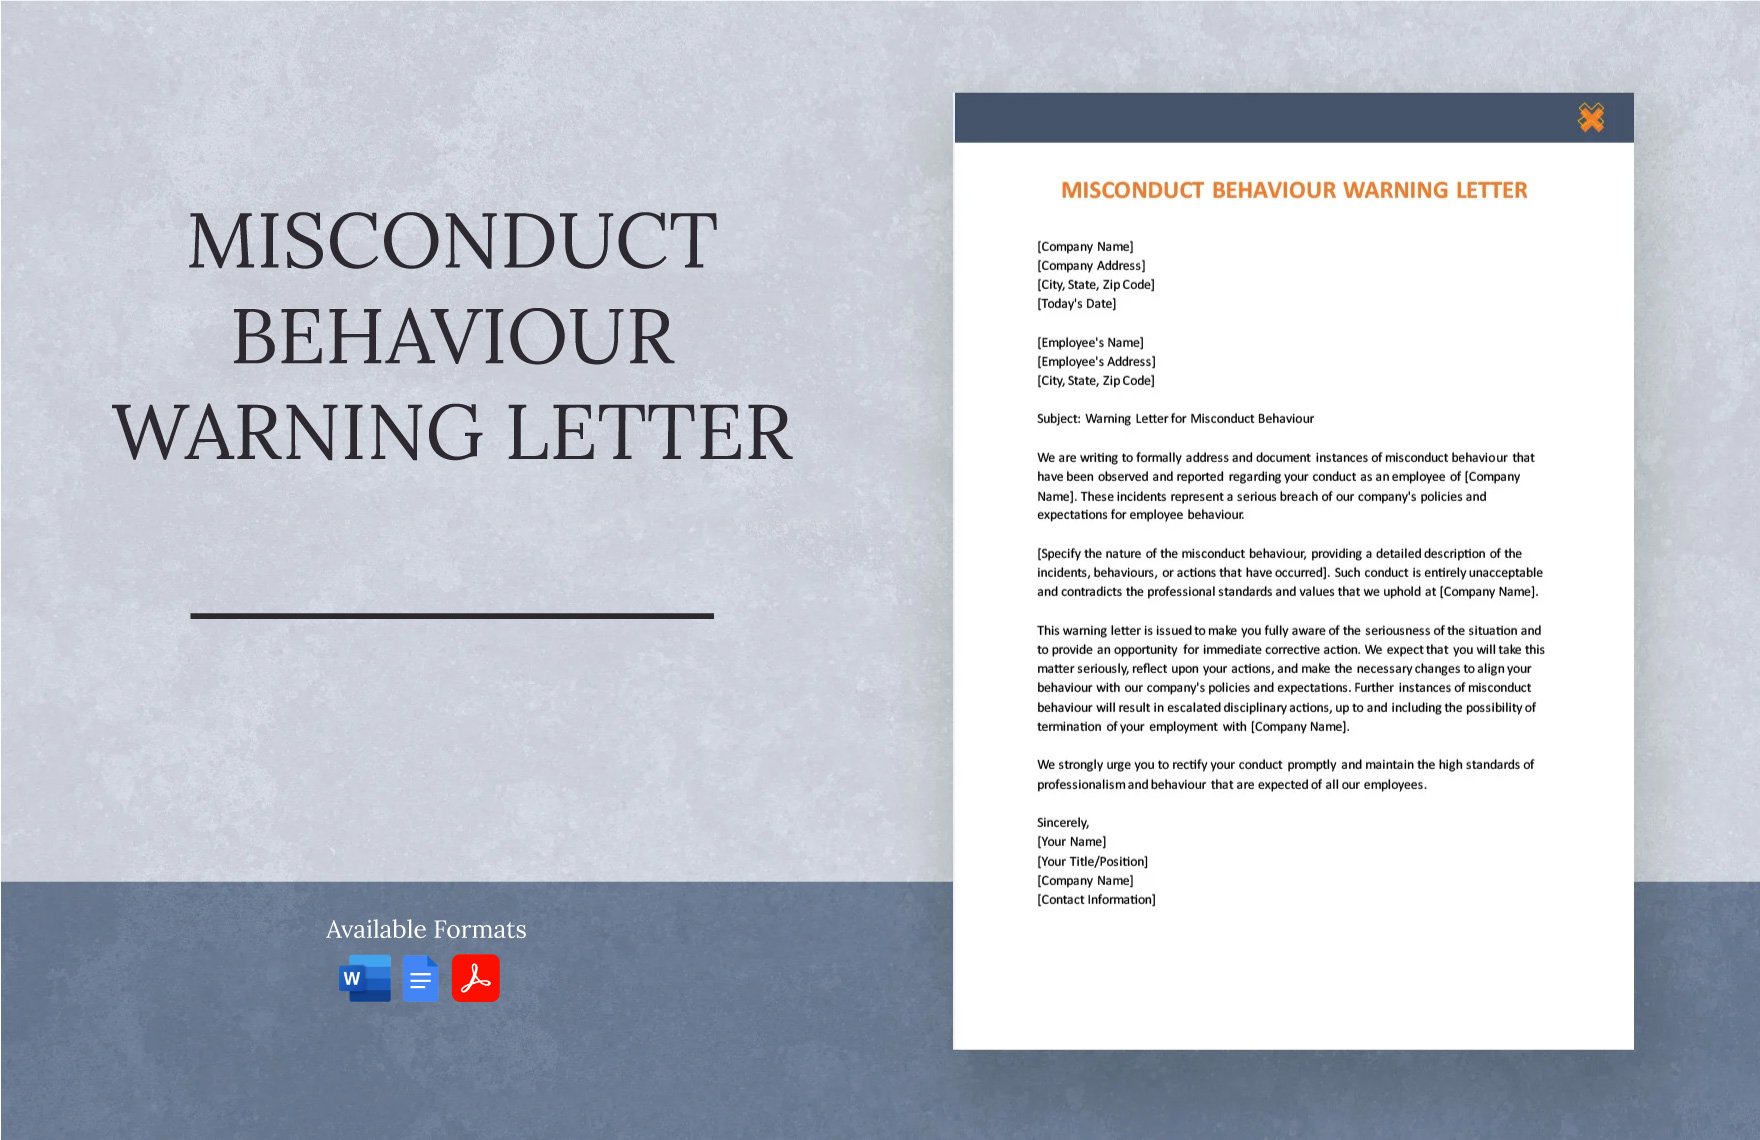 Misconduct Behavior Warning Letter